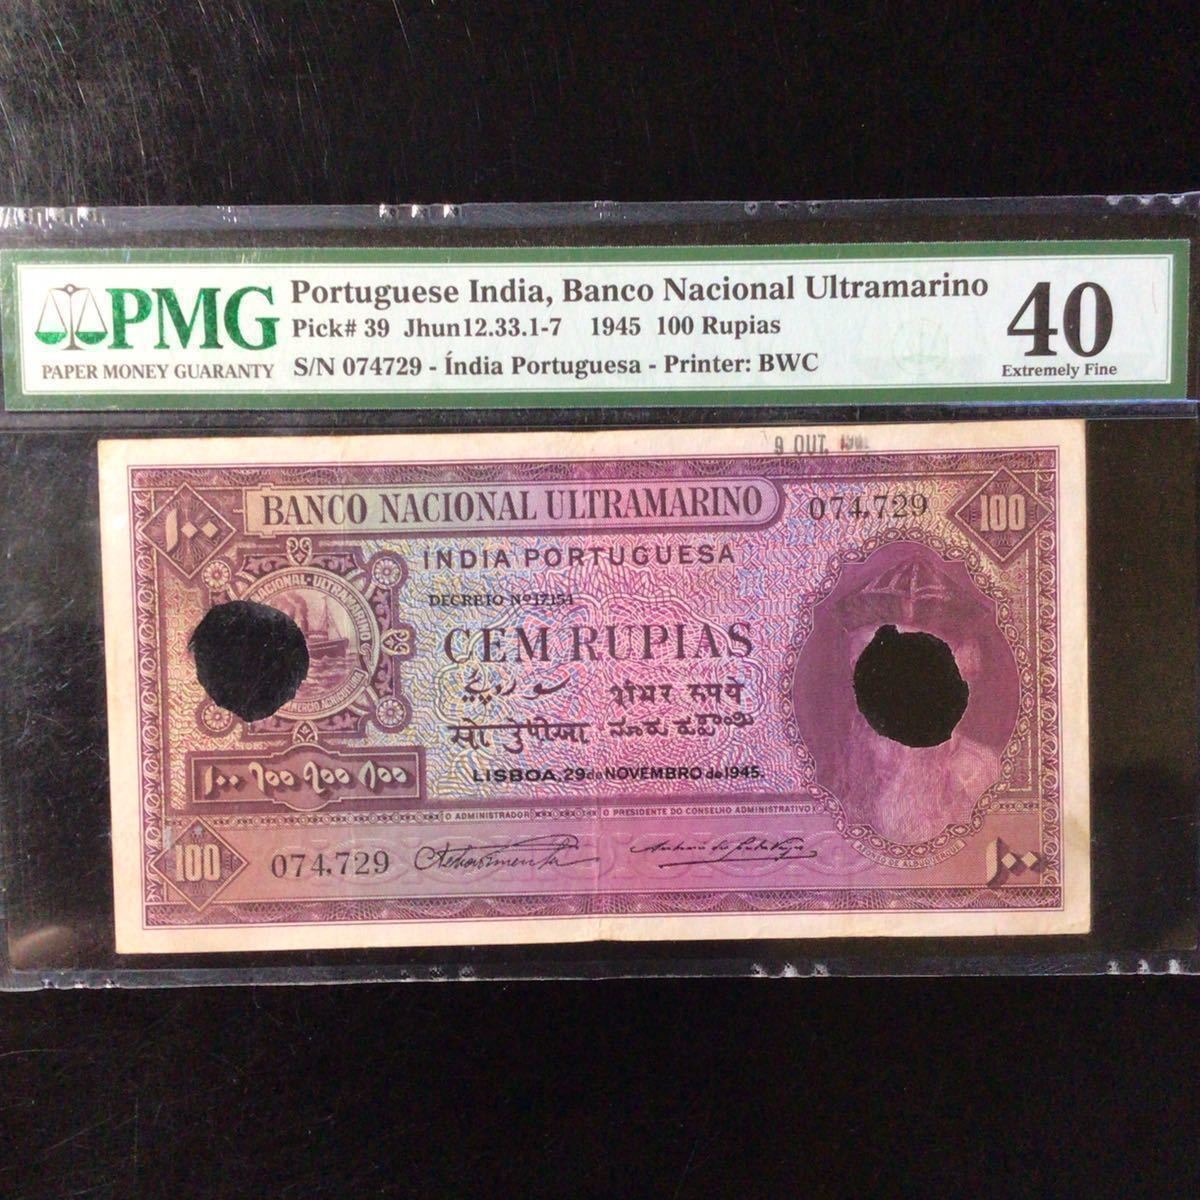 World Banknote Grading PORTUGUESE INDIA《Banco Nacional Ultramarino》100 Rupias【1945】『PMG Grading Extremely Fine 40』